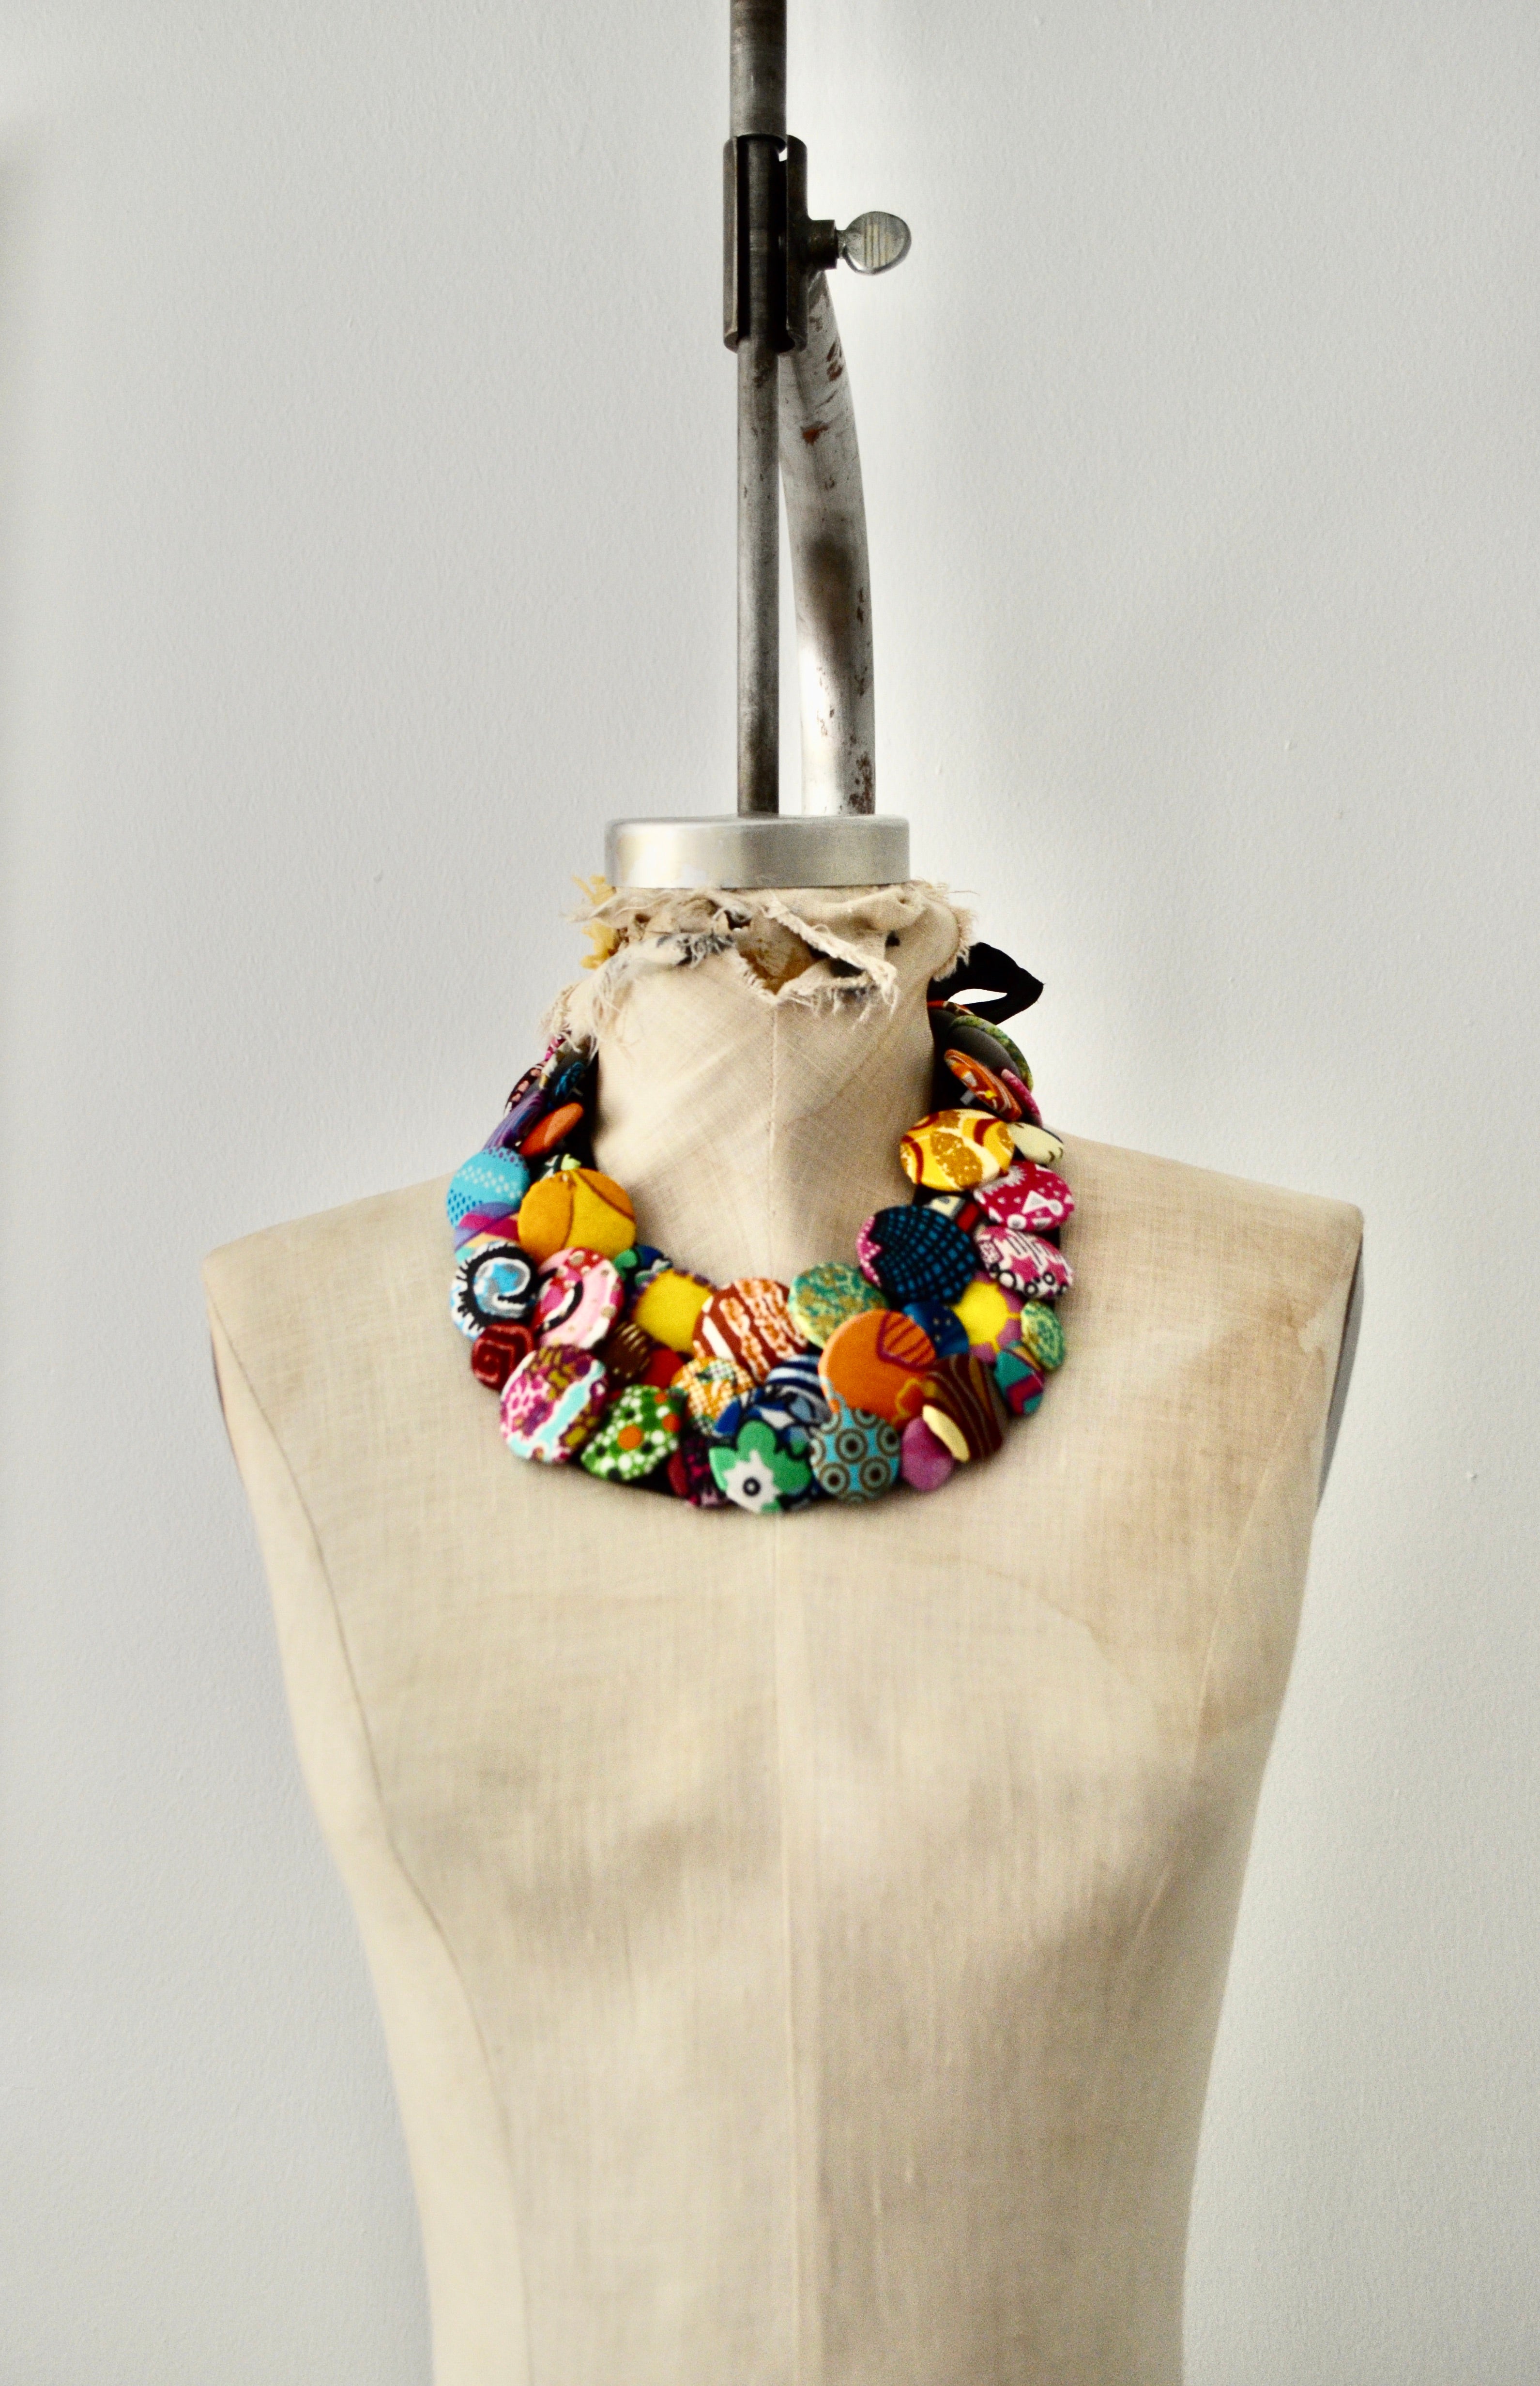 Boho Ethnic Ankara African Multi Strand Colorful Button Necklace